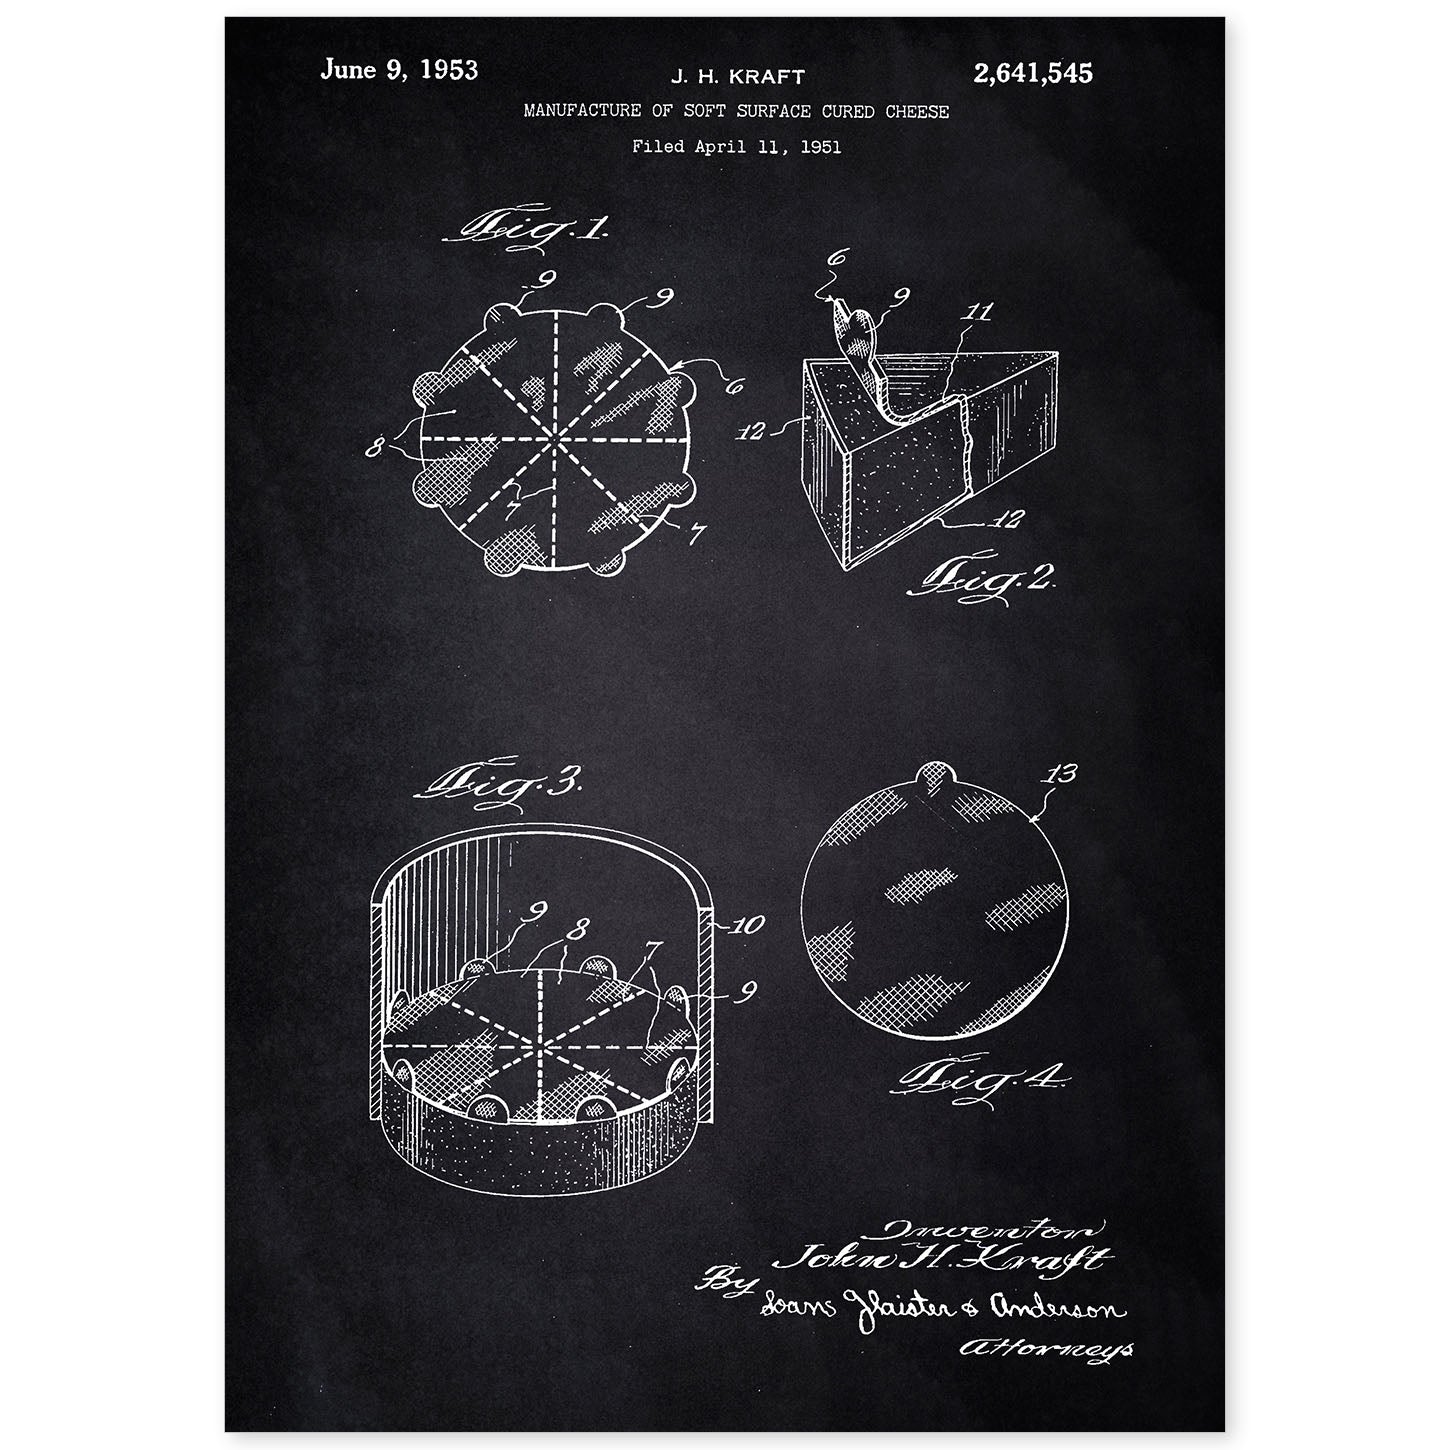 Poster con patente de Empaquetado de quesitos. Lámina con diseño de patente antigua-Artwork-Nacnic-A4-Sin marco-Nacnic Estudio SL